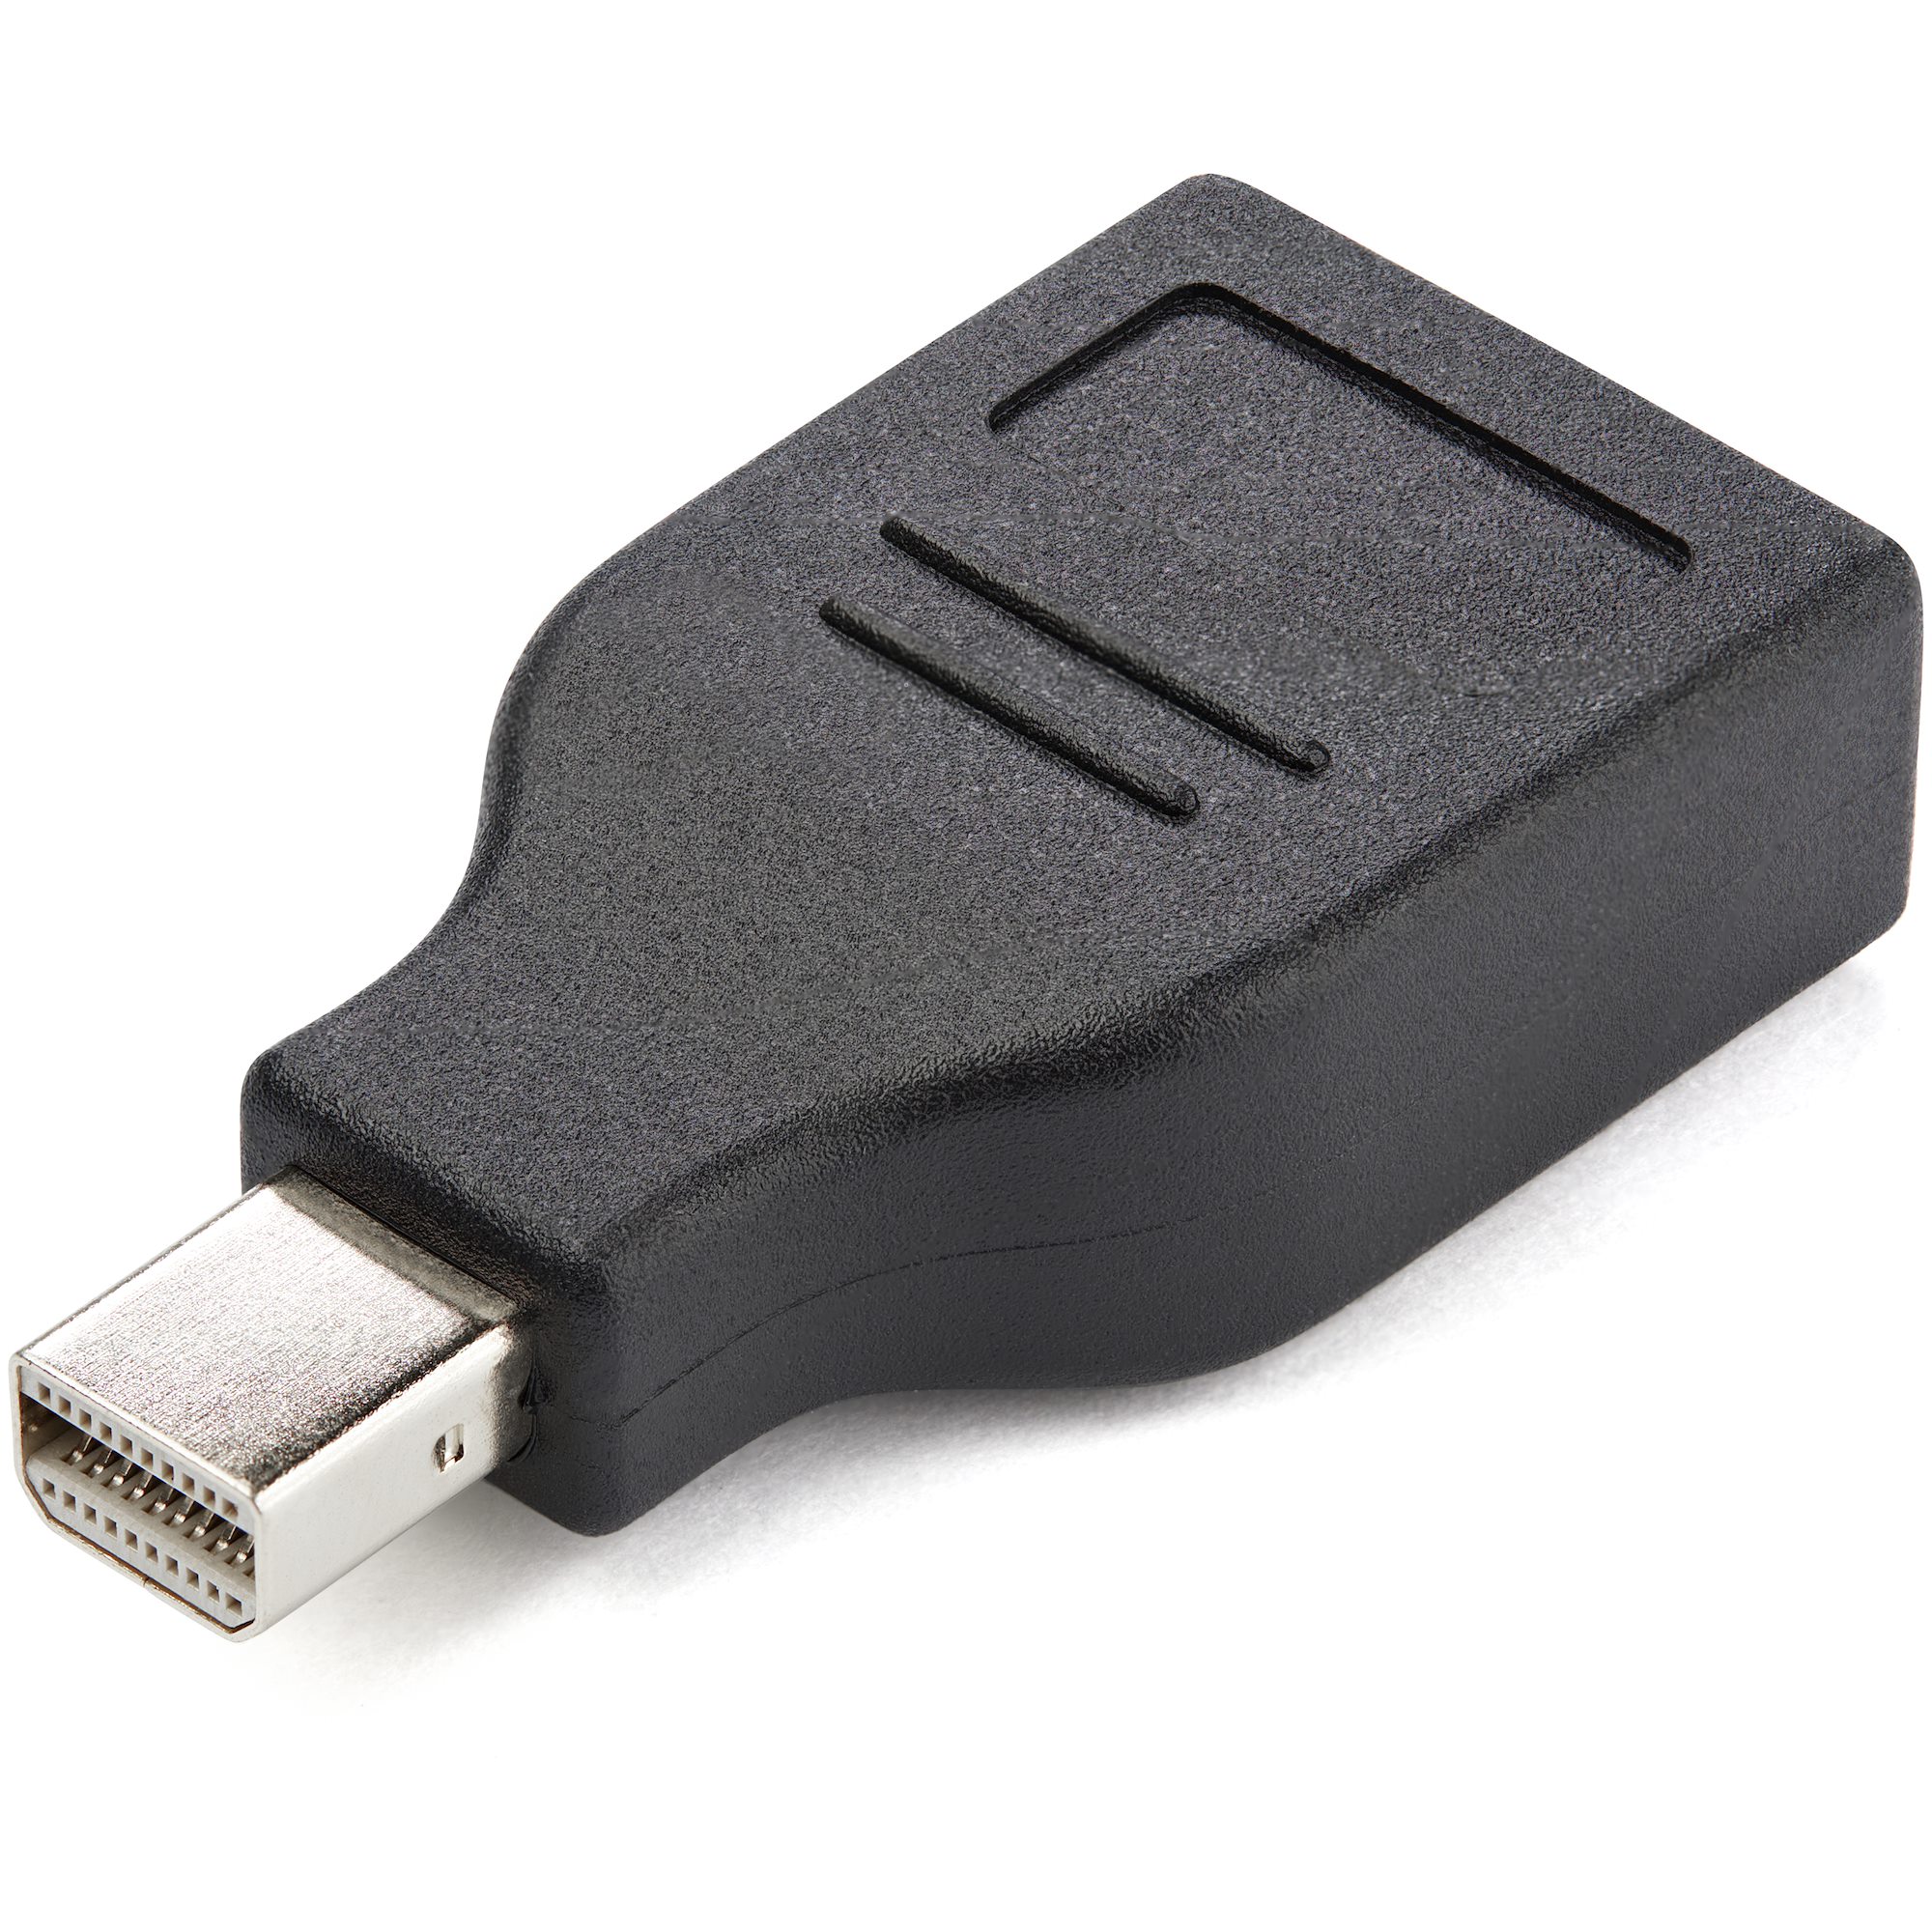 StarTech.com Câble Mini DisplayPort vers DisplayPort de 1,8 m - Adaptateur Mini  DP vers DP 1.2 à 1,8 mètres - M/M - Noir (MDP2DPMM6)